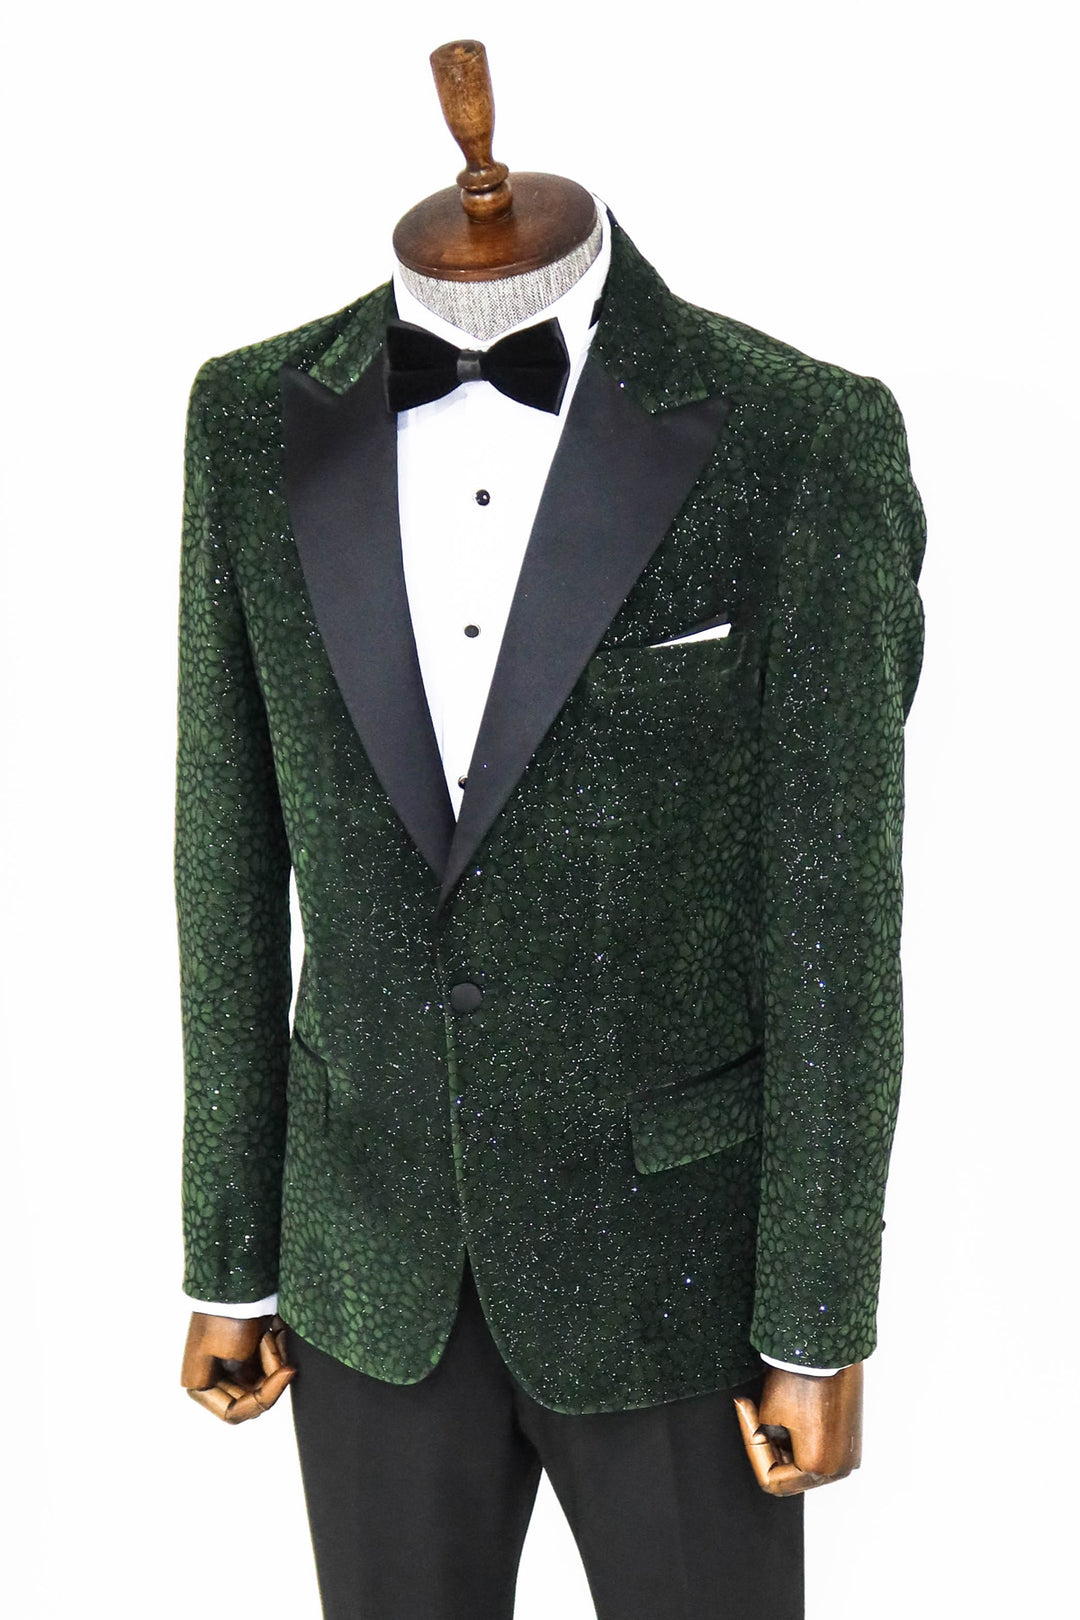 Glitter Floral Patterned Dark Green Men Prom Blazer - Wessi